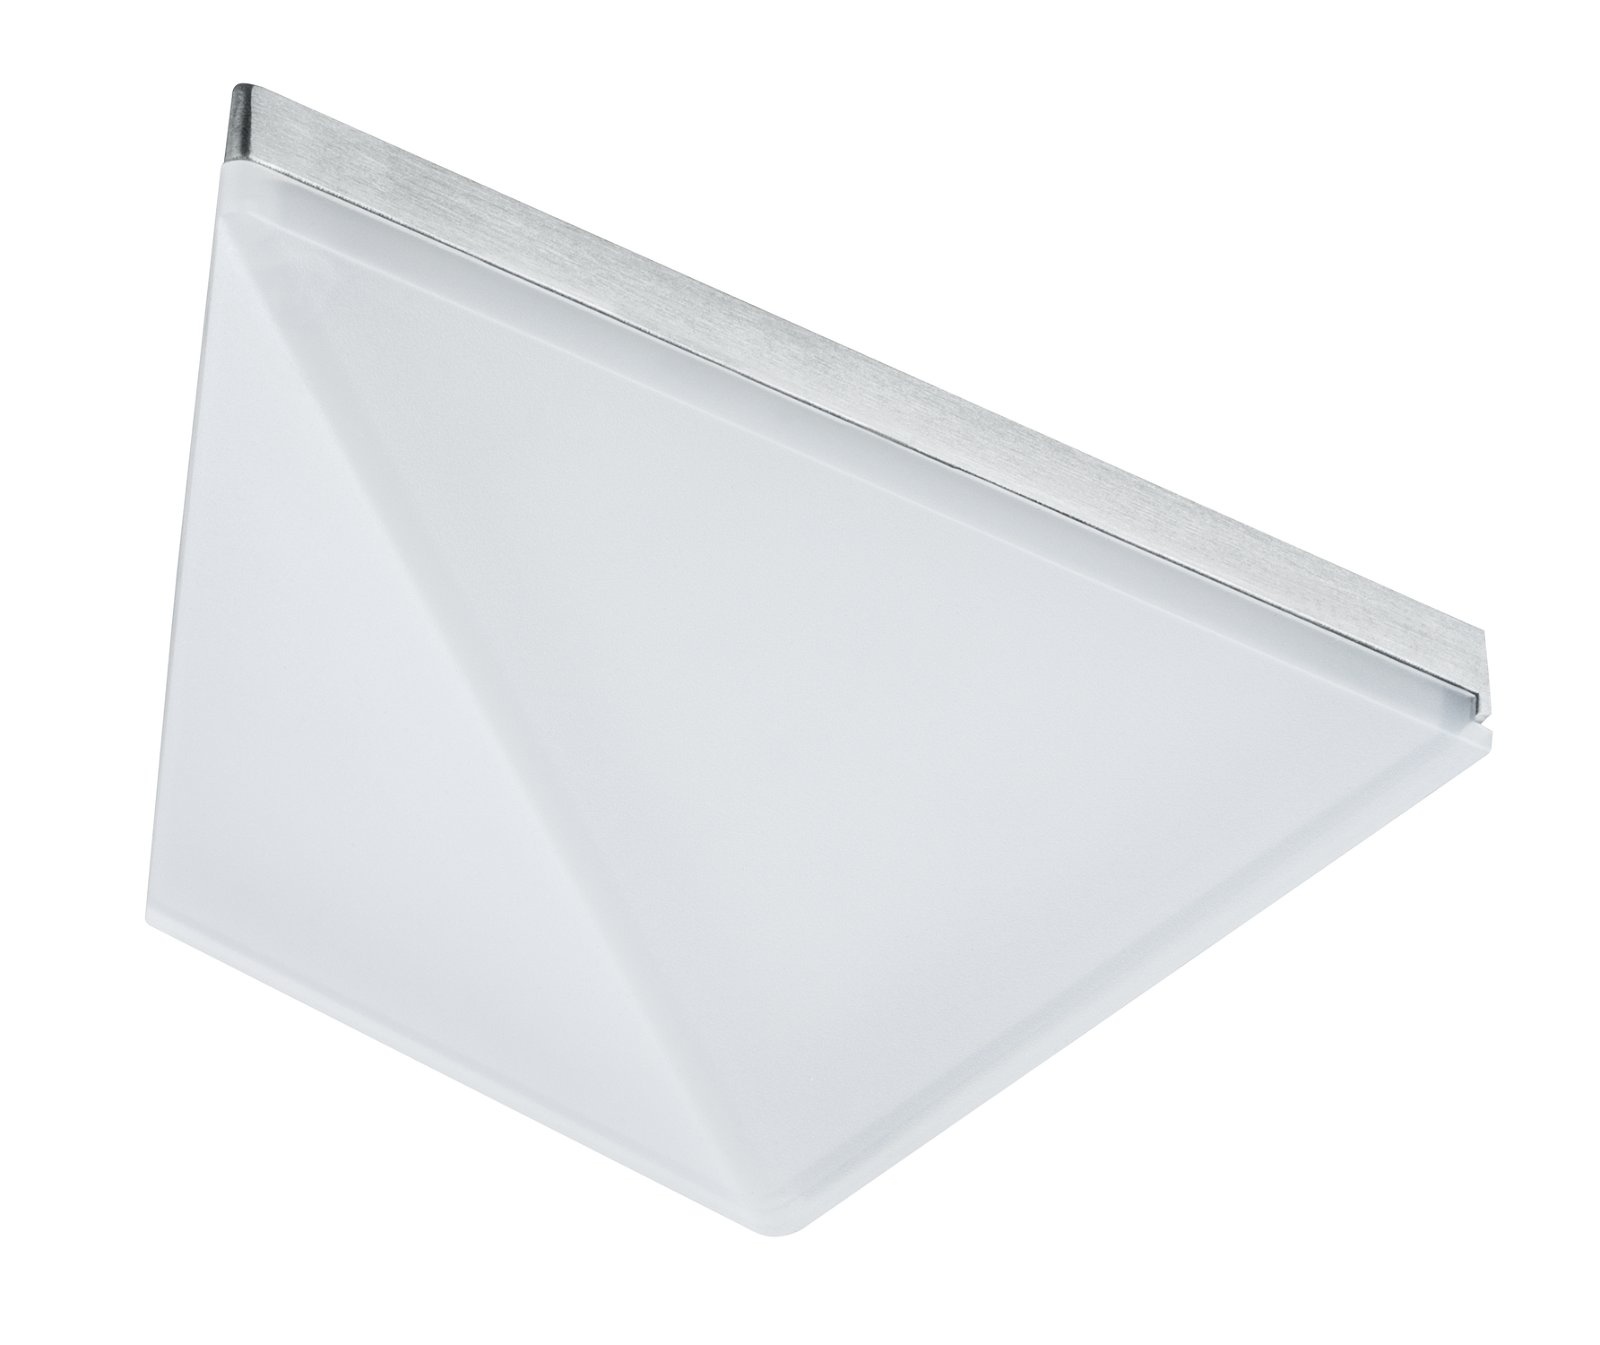 Furniture surface-mounted luminaire LED Kite triangular 2-piece set Including LED module 2 x 6.2 W